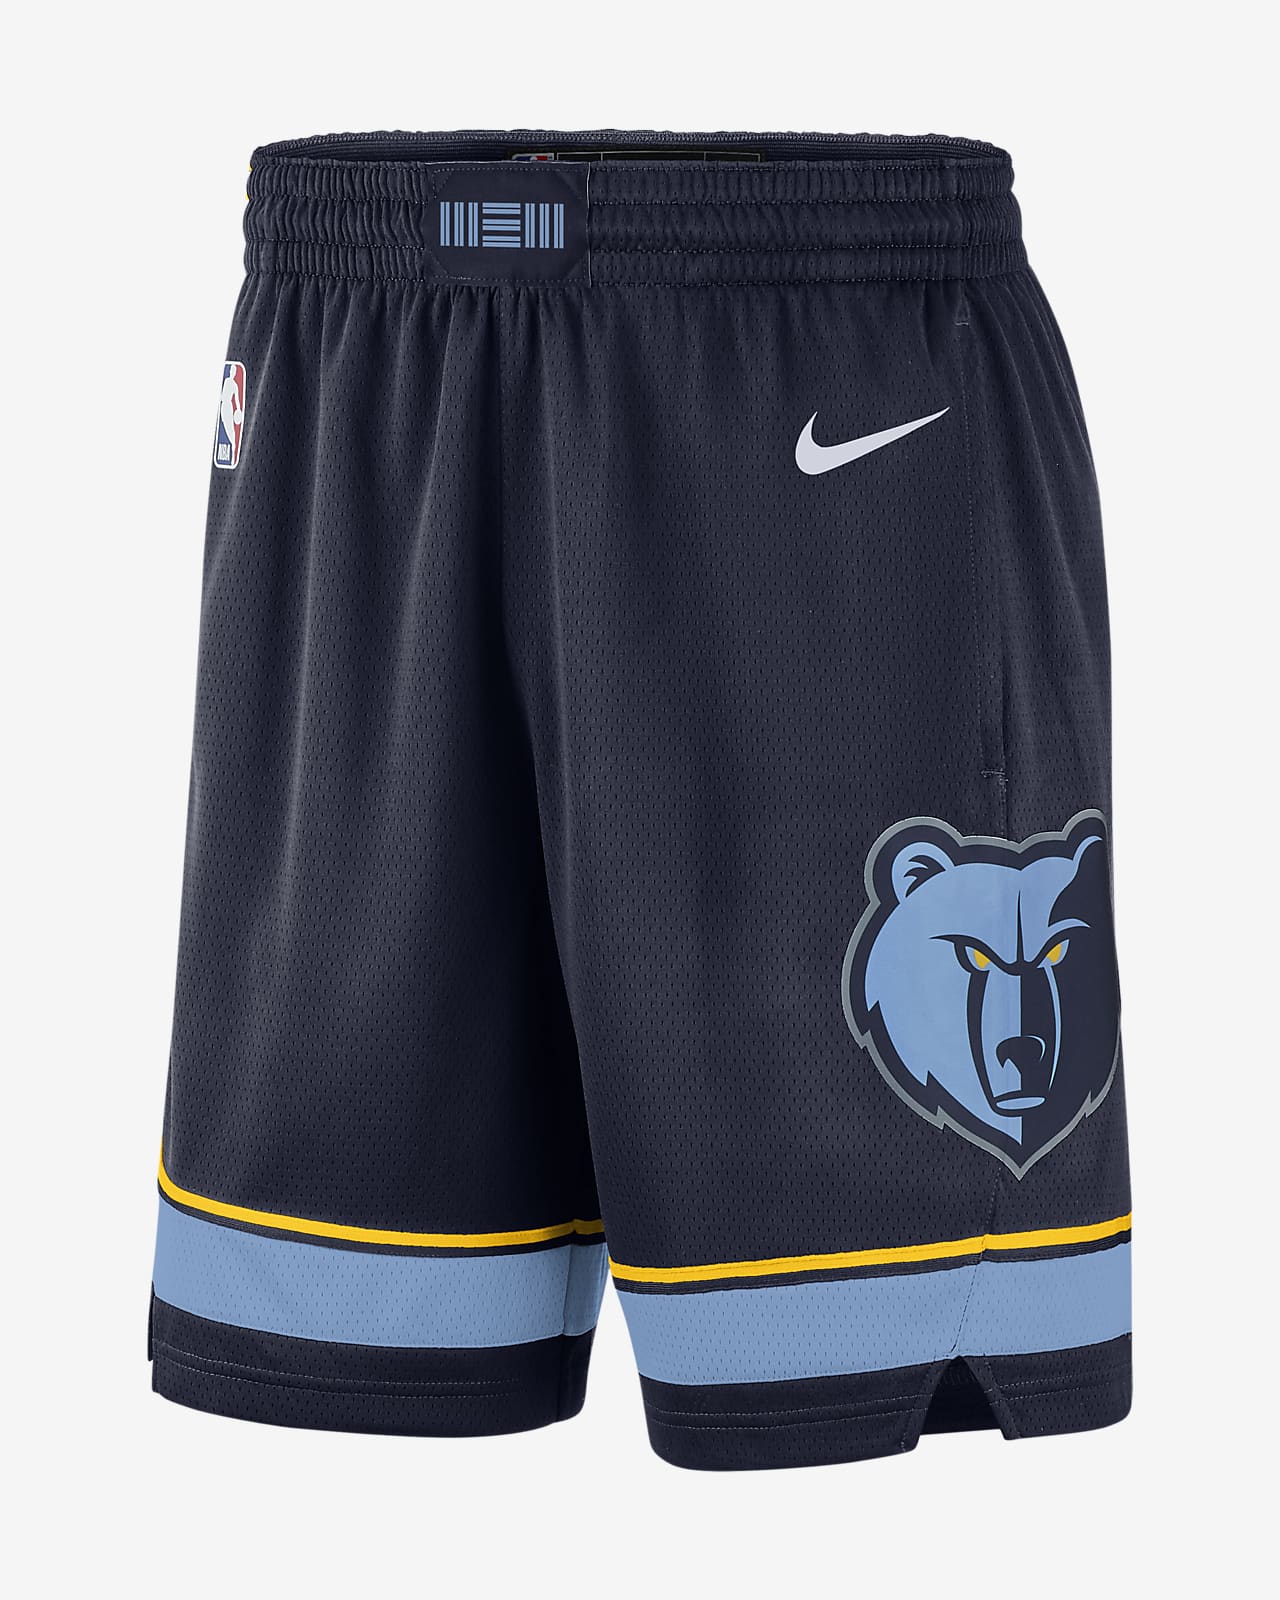 Memphis Grizzlies Icon Edition Pantalón corto Swingman Nike de la NBA - Hombre